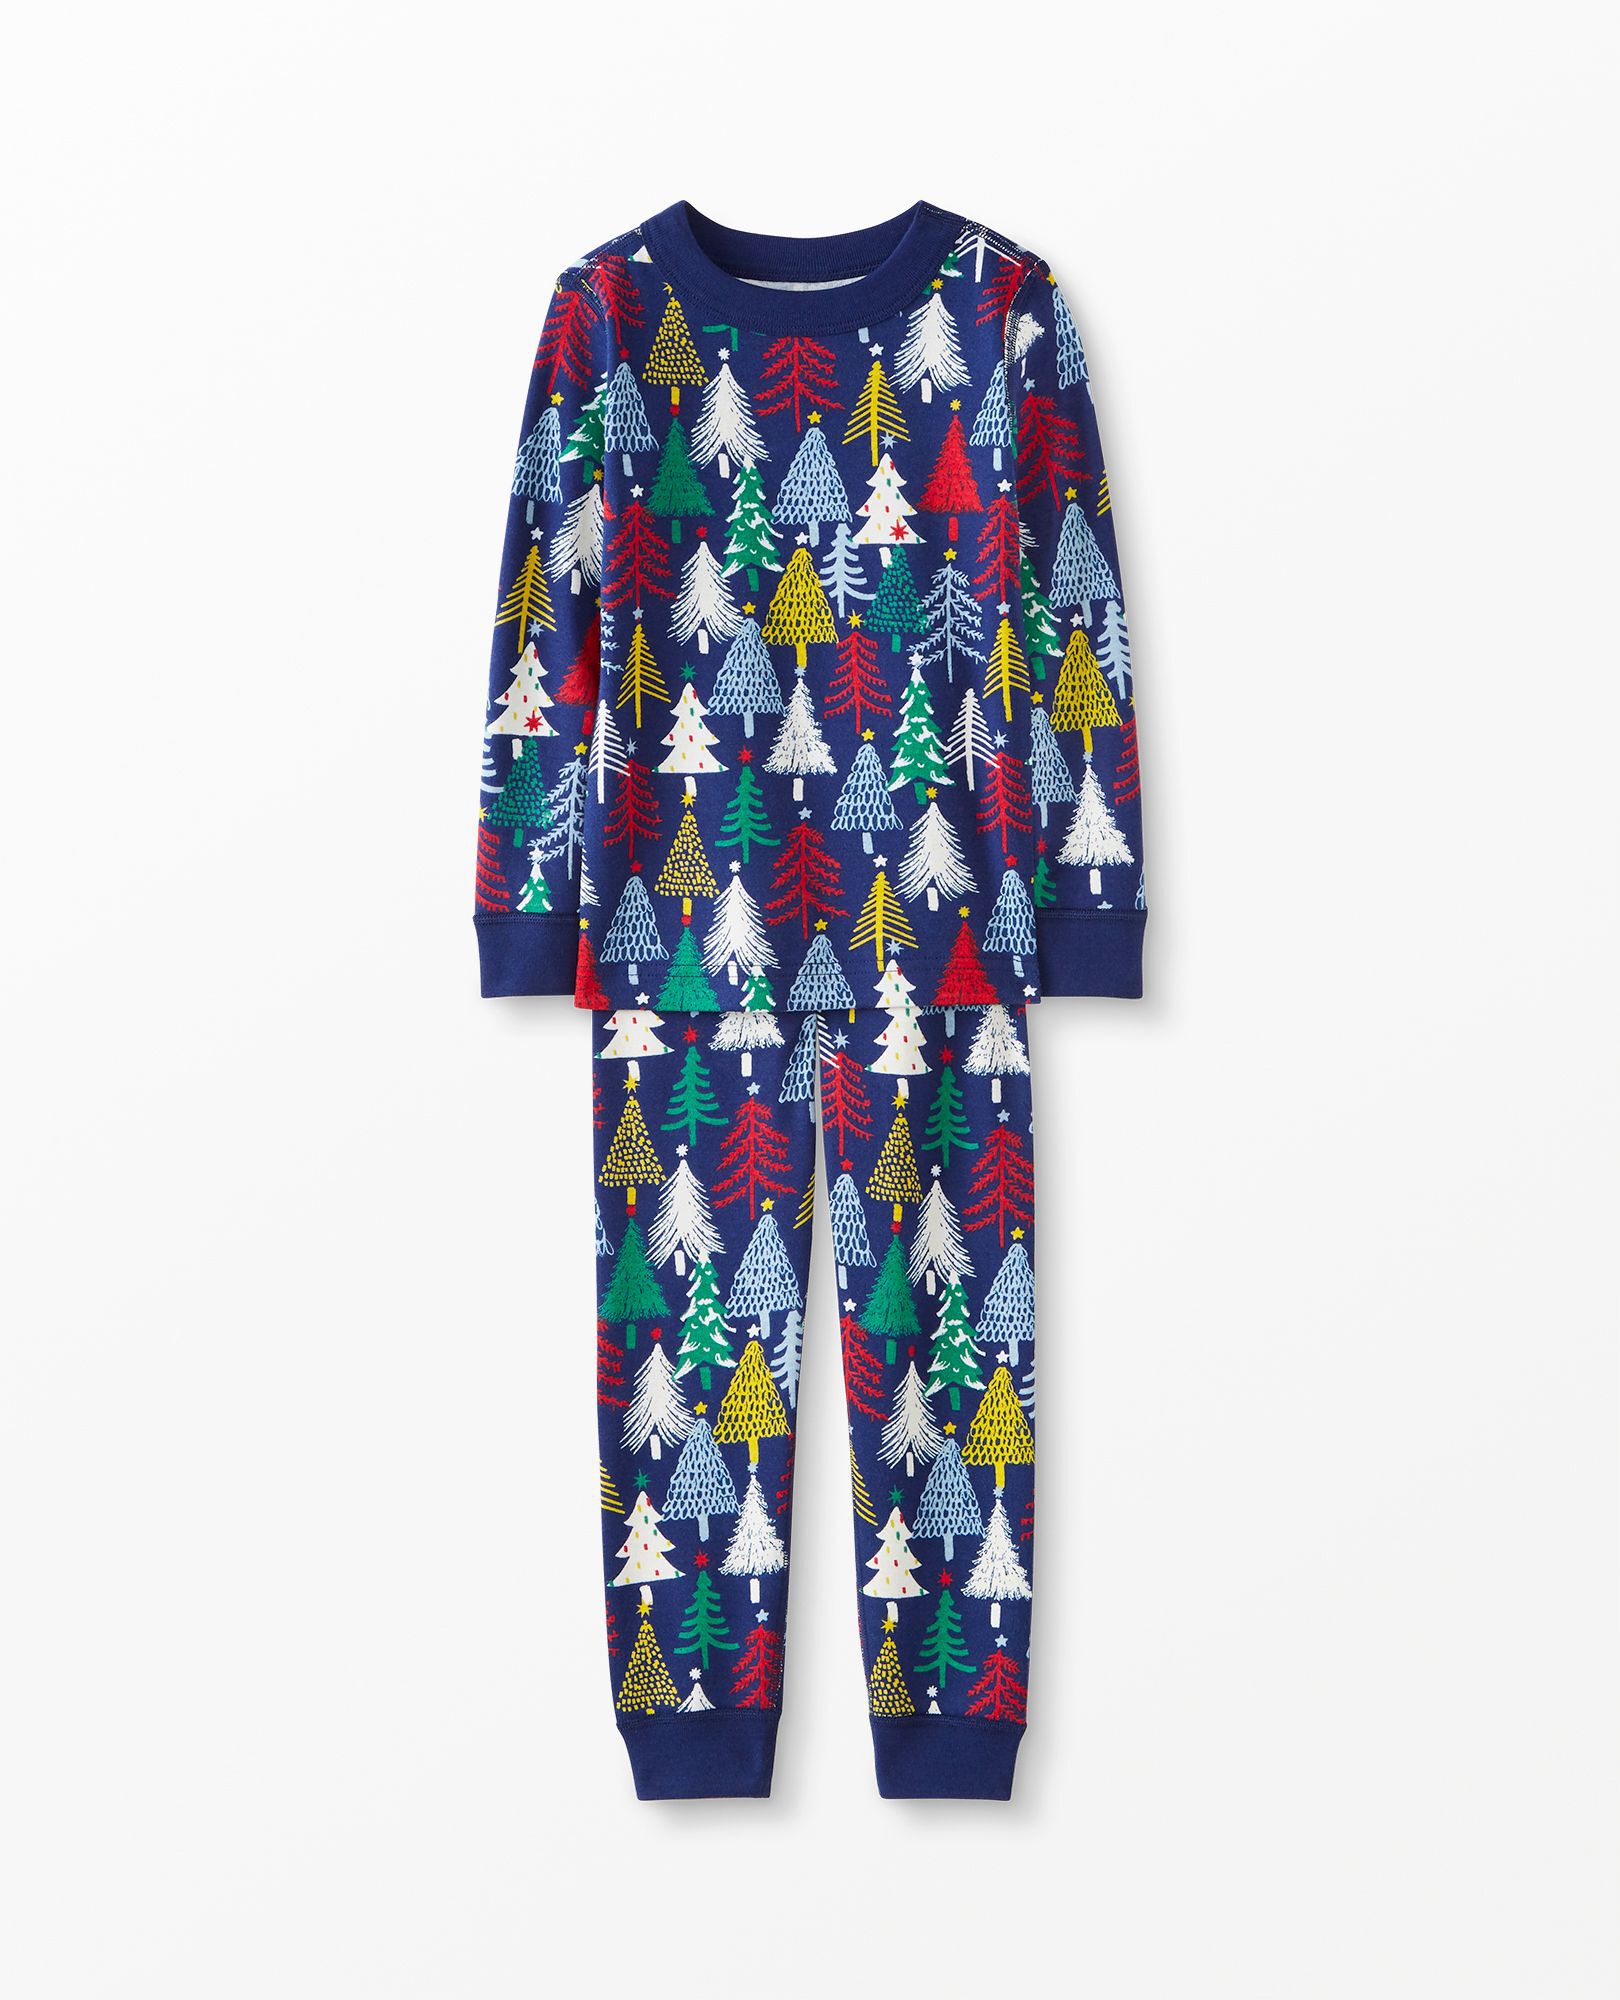 Pajamas & Sleepwear: Shop All | Hanna Andersson